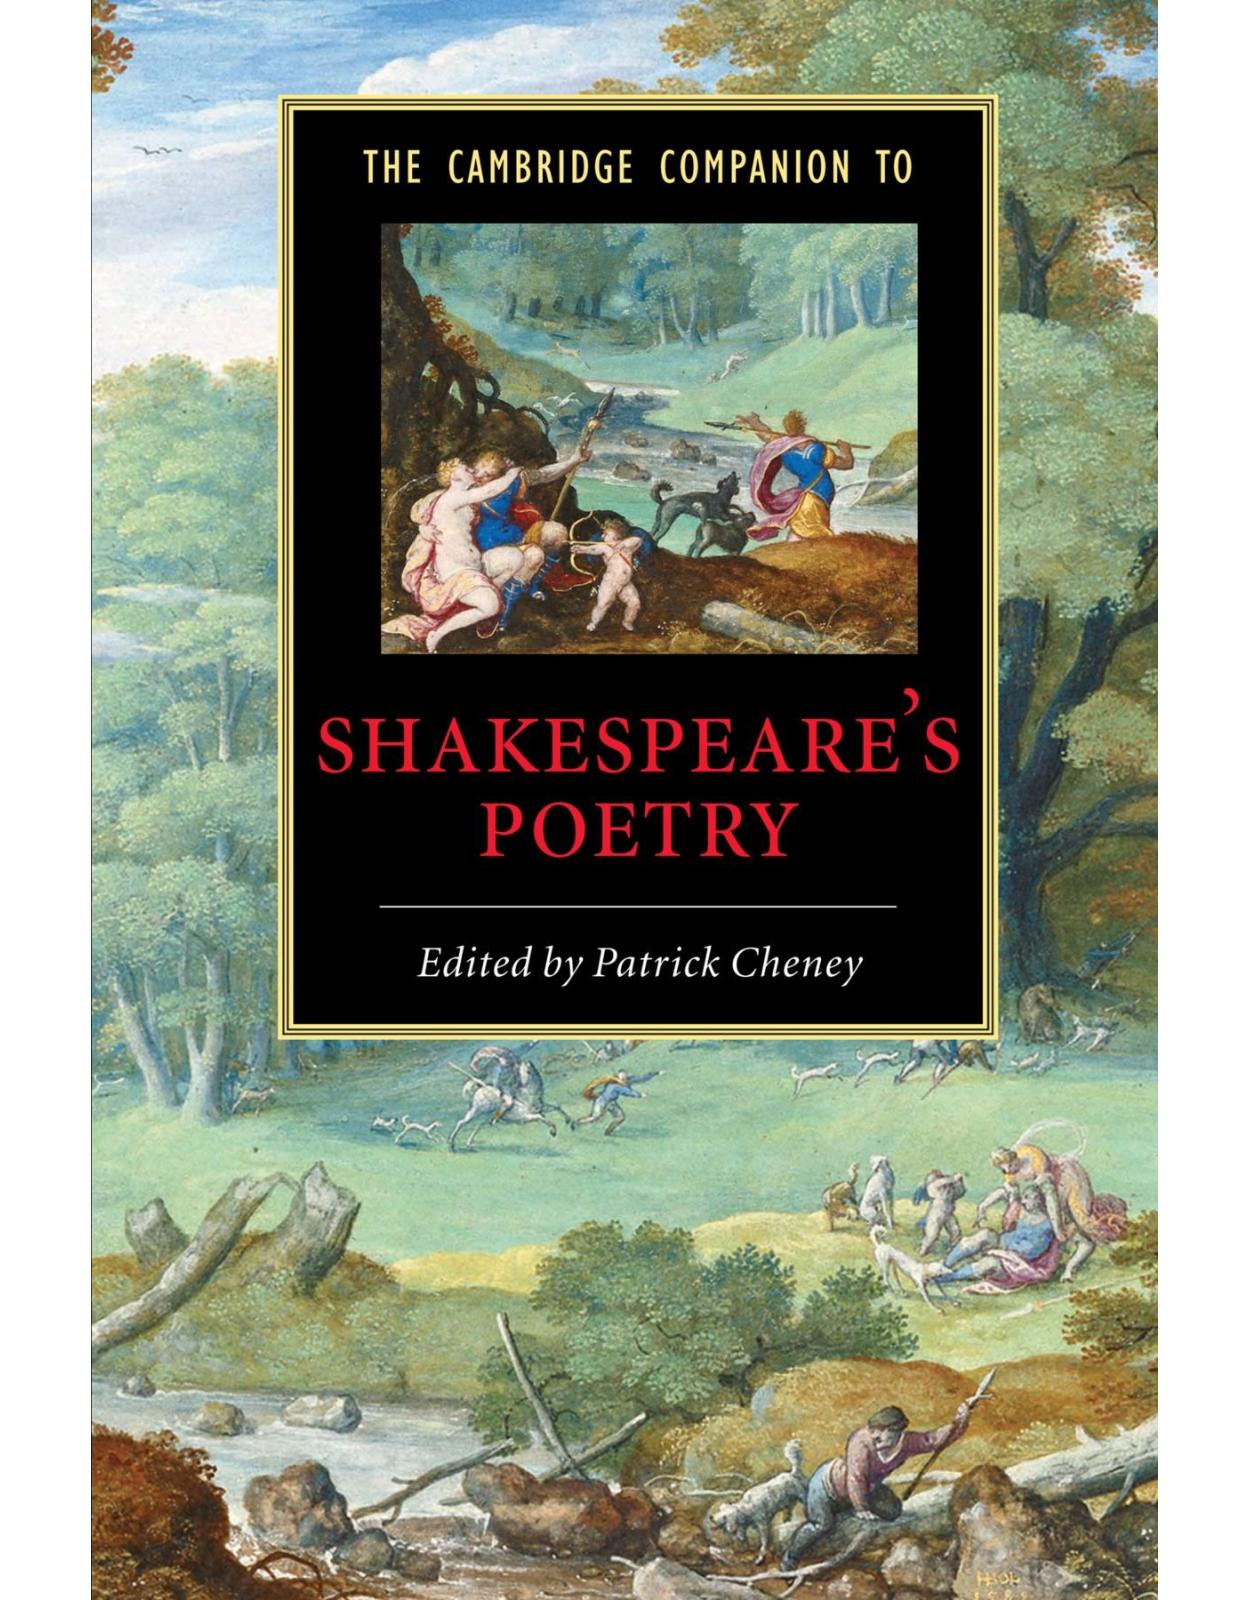 The Cambridge Companion to Shakespeare's Poetry (Cambridge Companions to Literature)